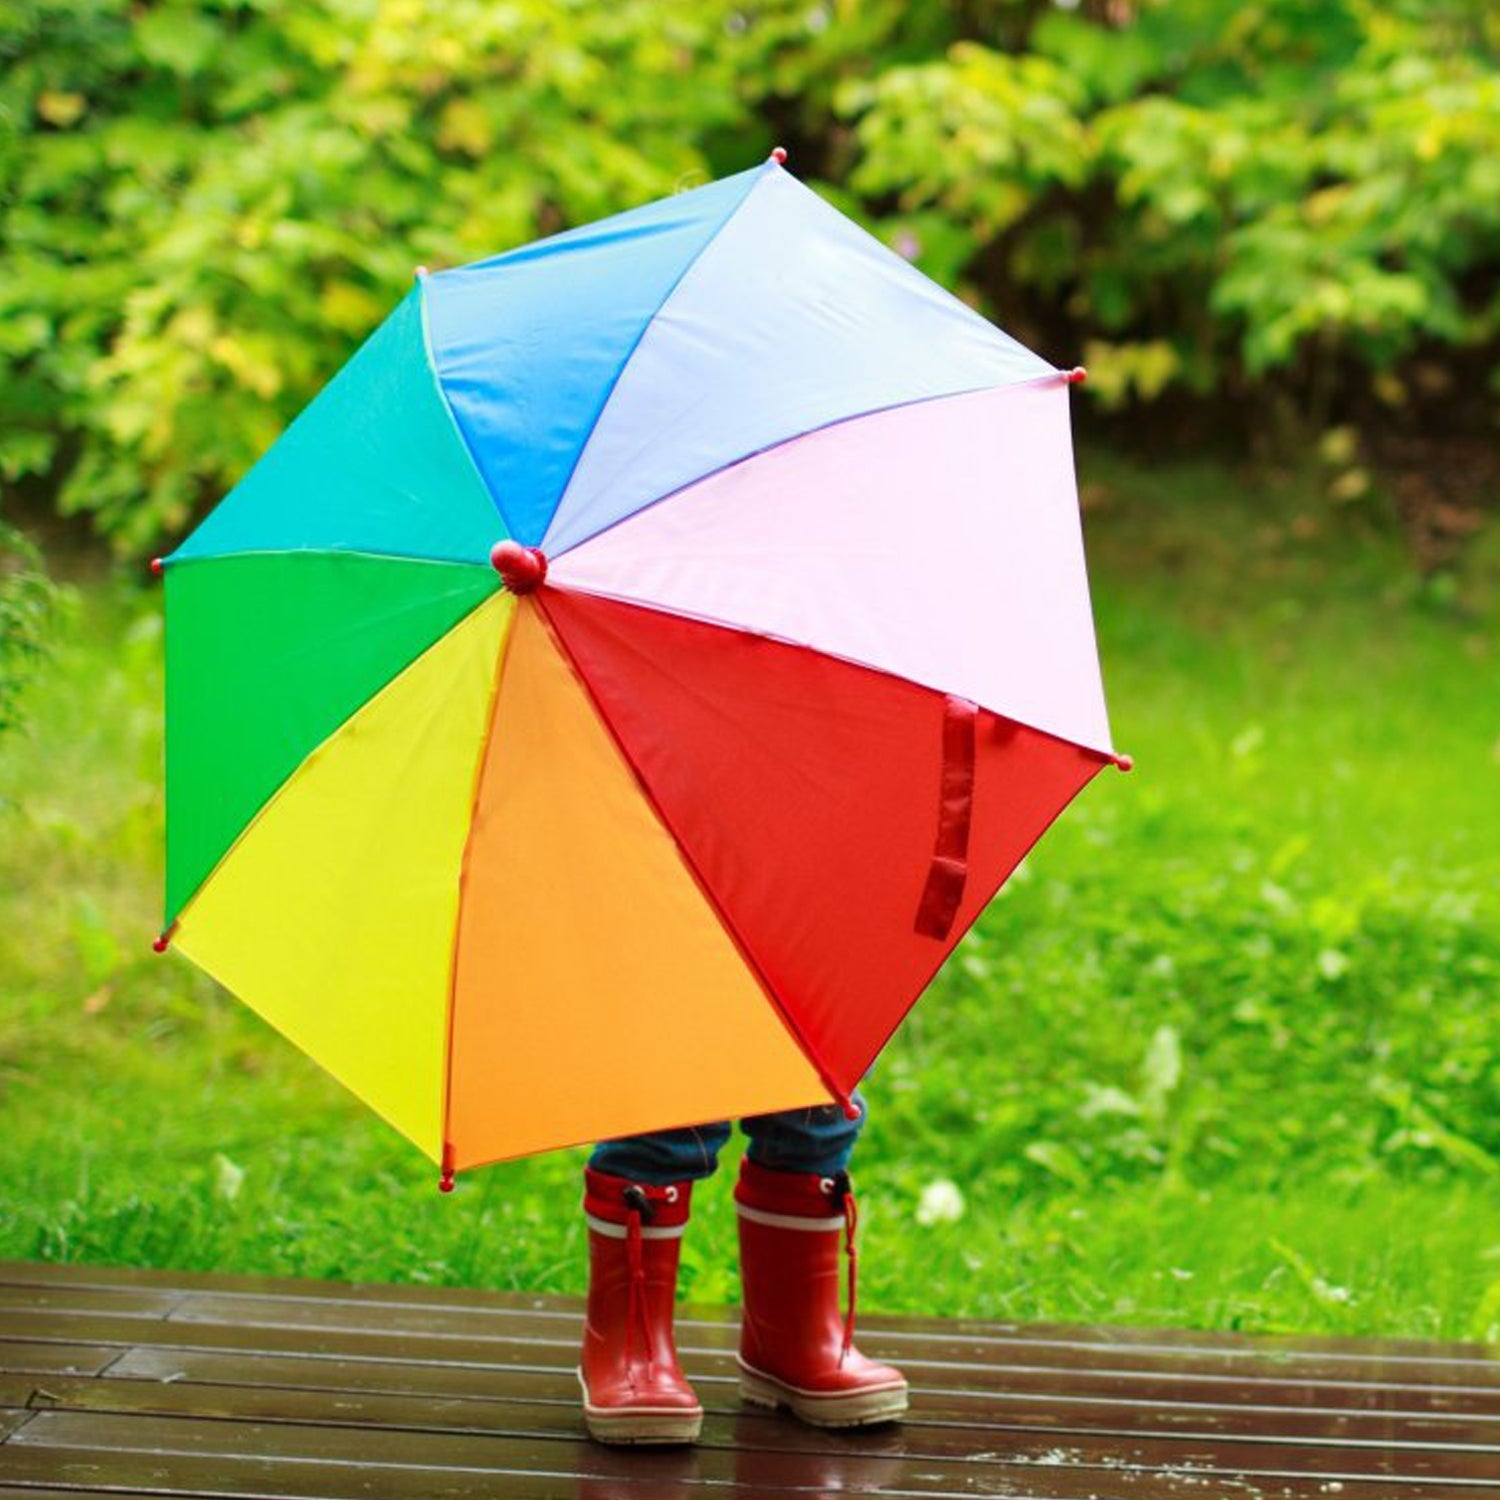 9105 Rainbow Umbrella for Men & Women (Multicolor) 